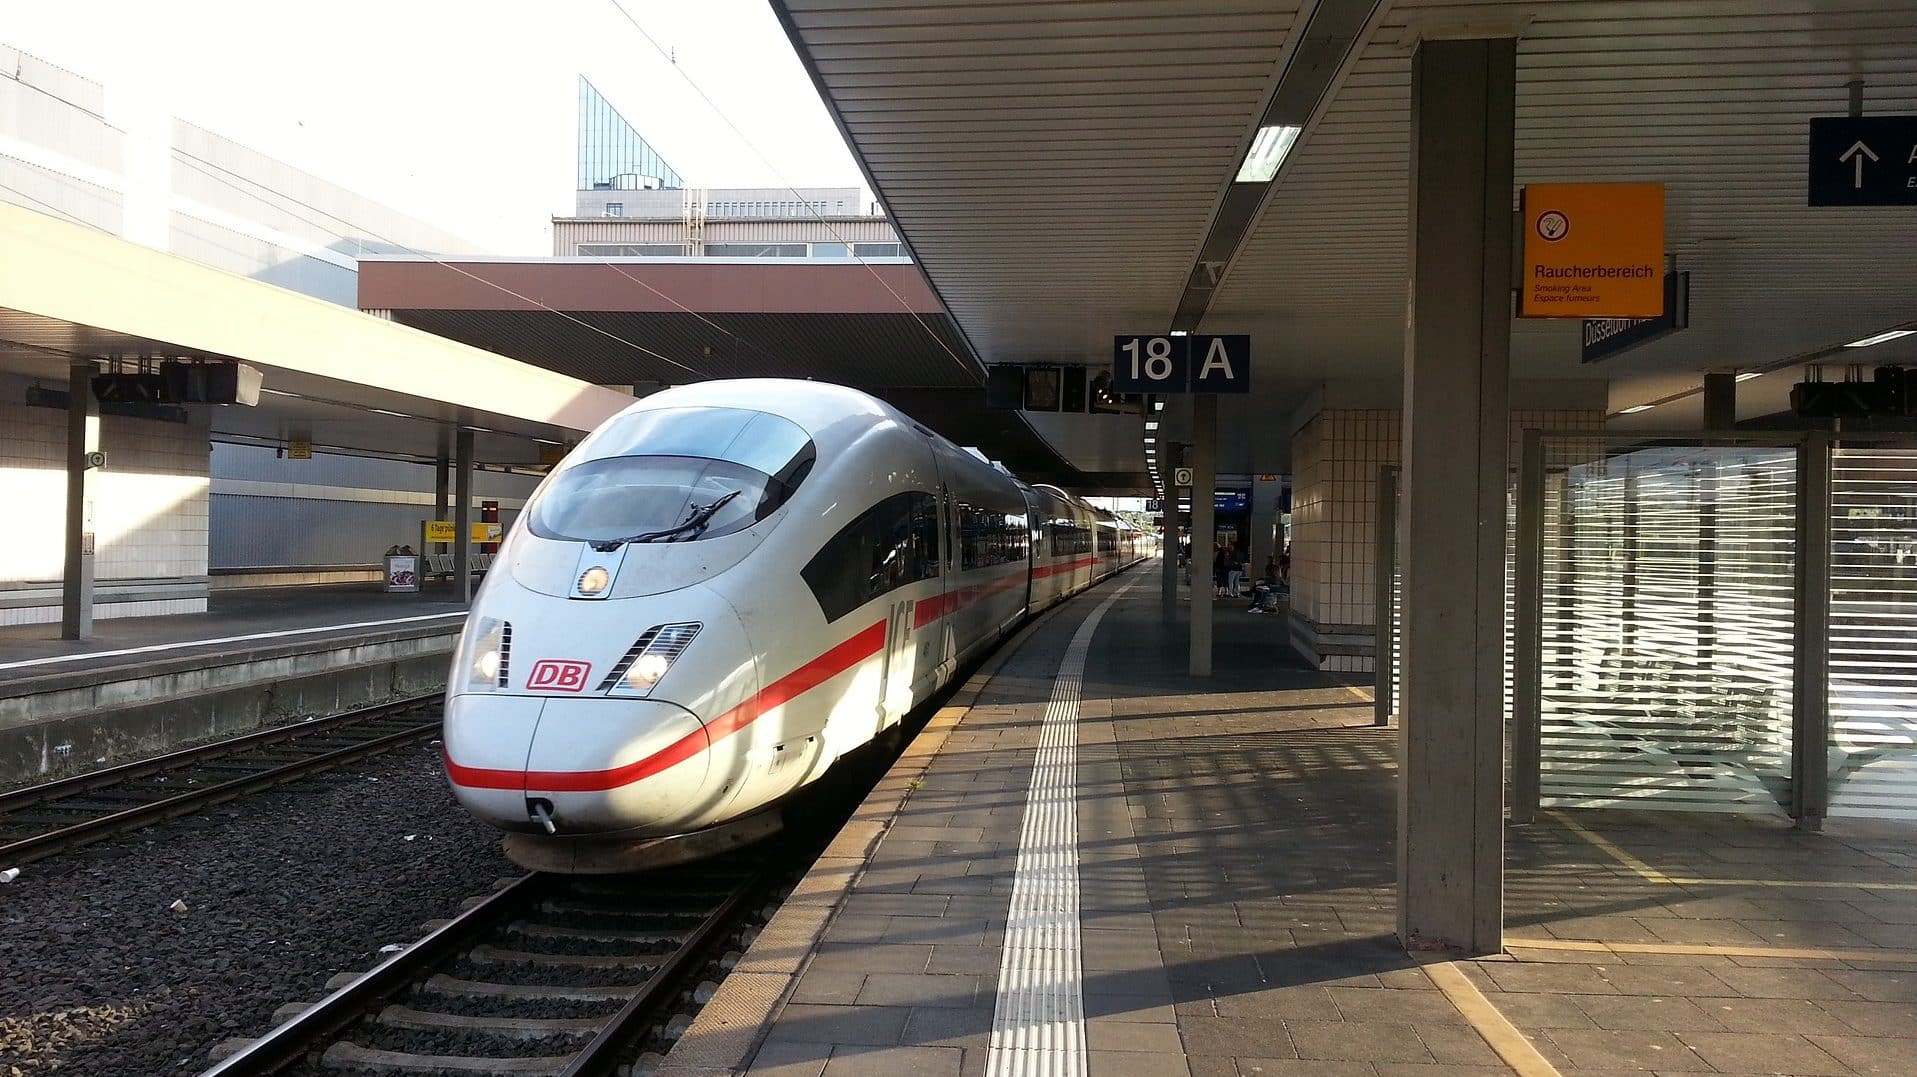 Stadtmitte is home to Düsseldorf's Main Train Station